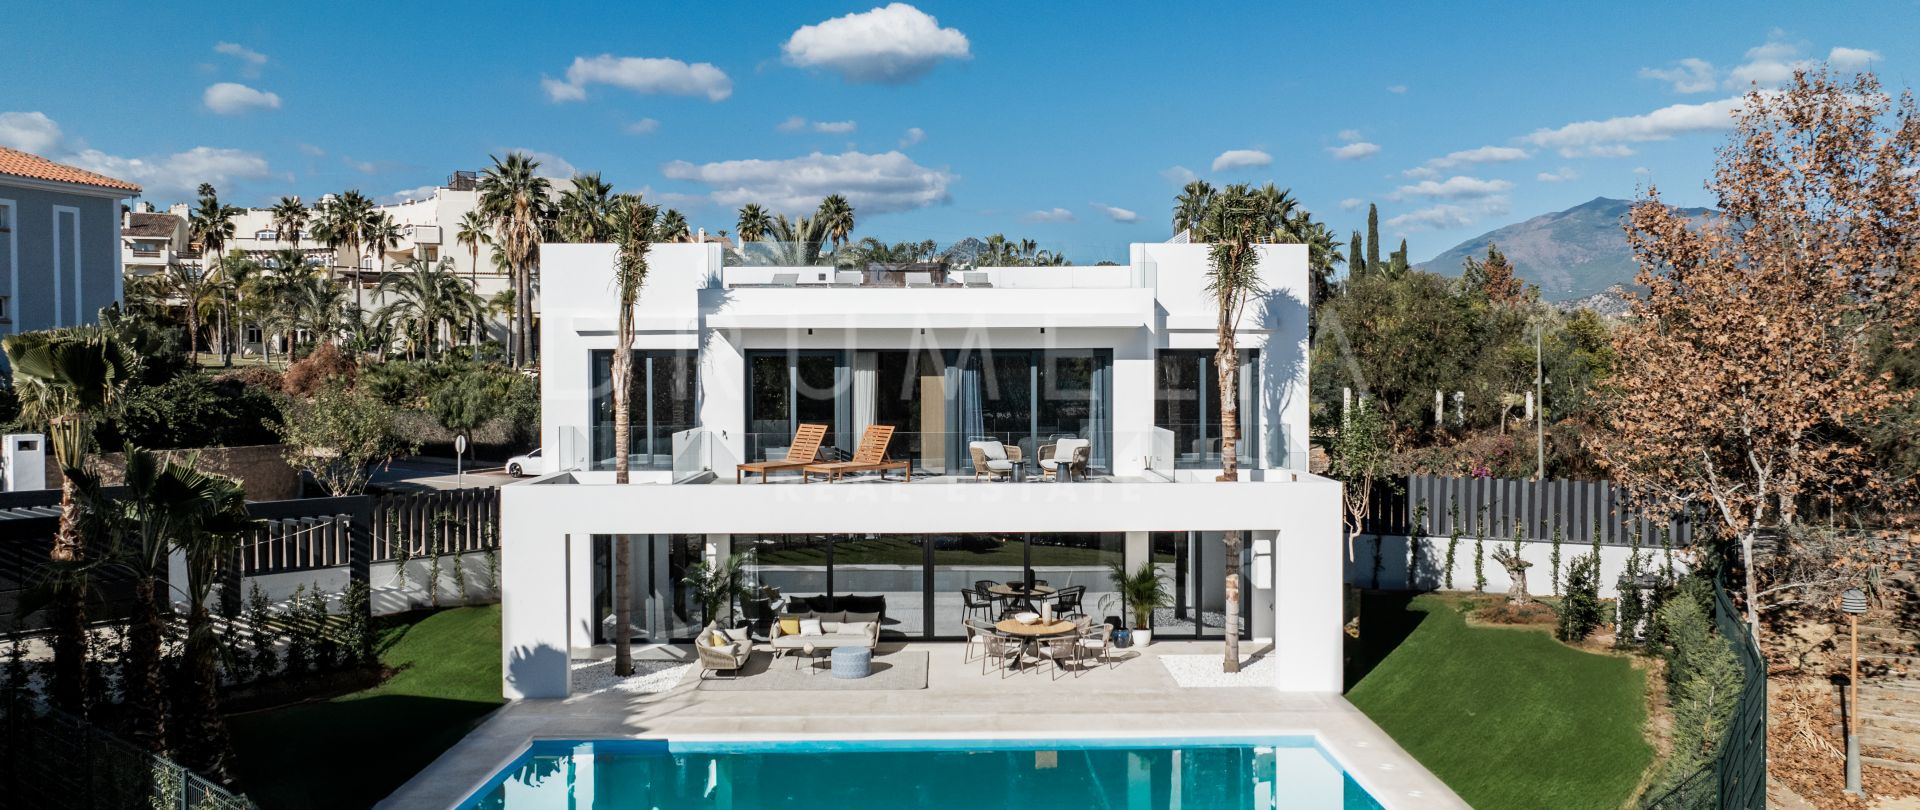 Brand new Luxurious Modern Villas In Marbella, New Golden Mile.